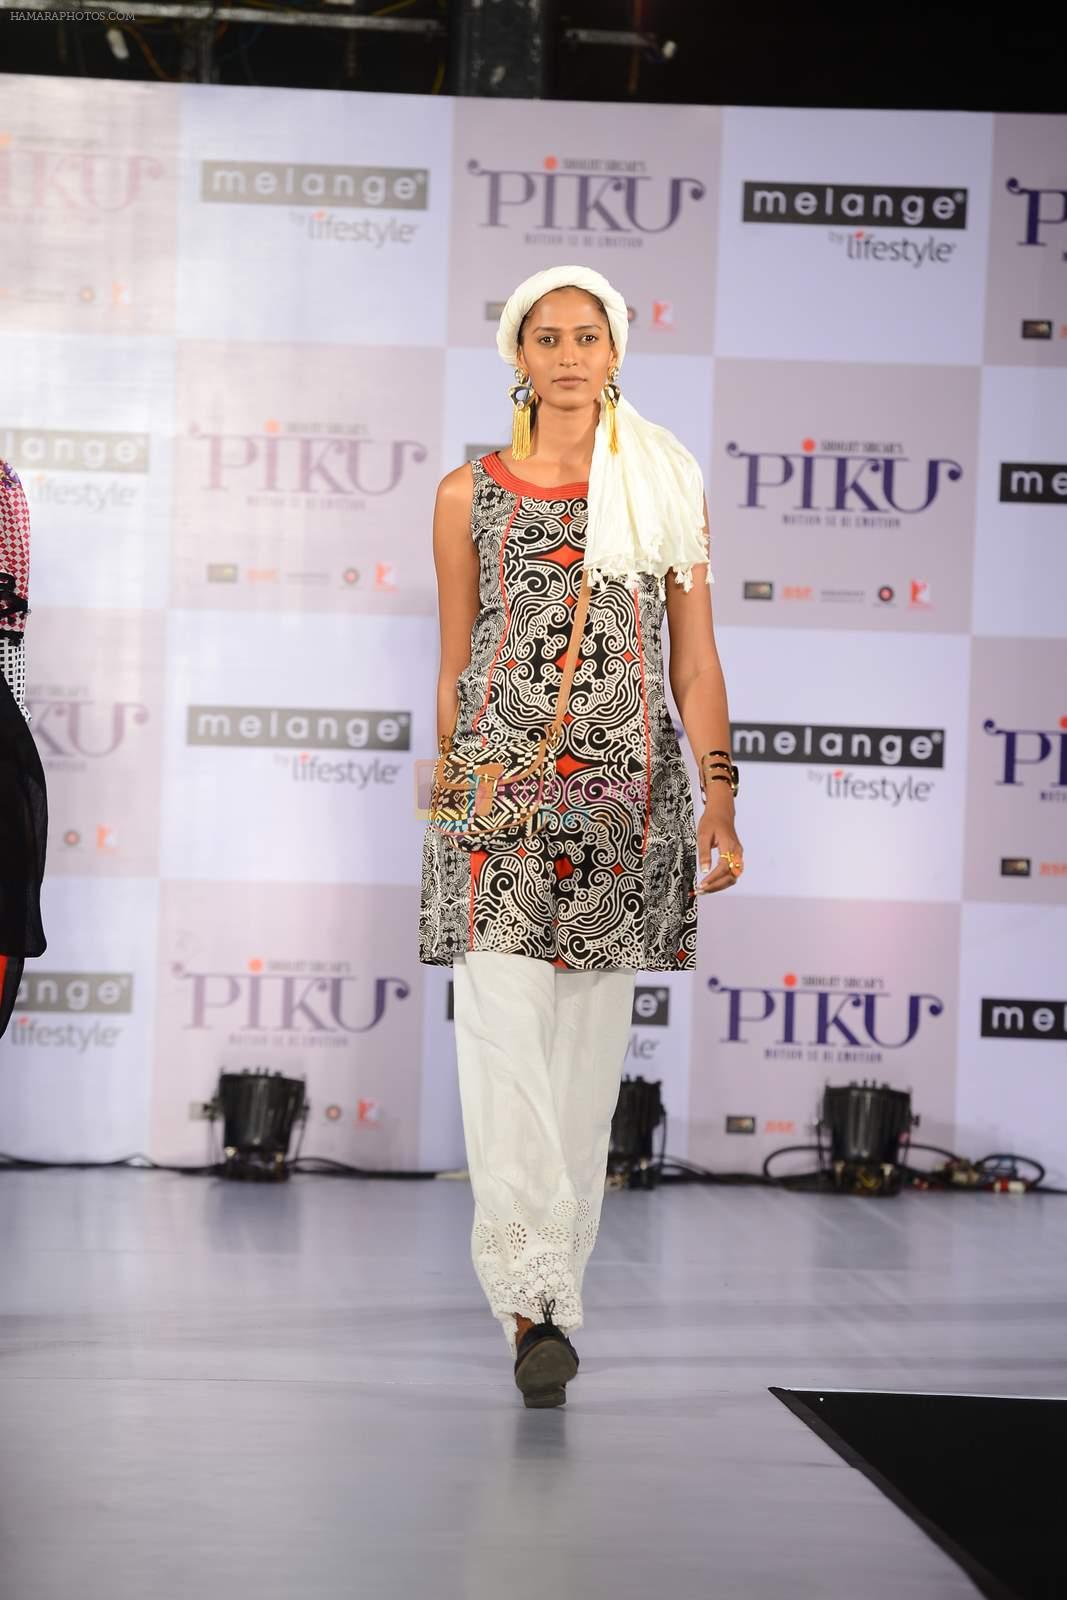 unveils Piku Melange ethnic chic look in Filmcity on 28th April 2015